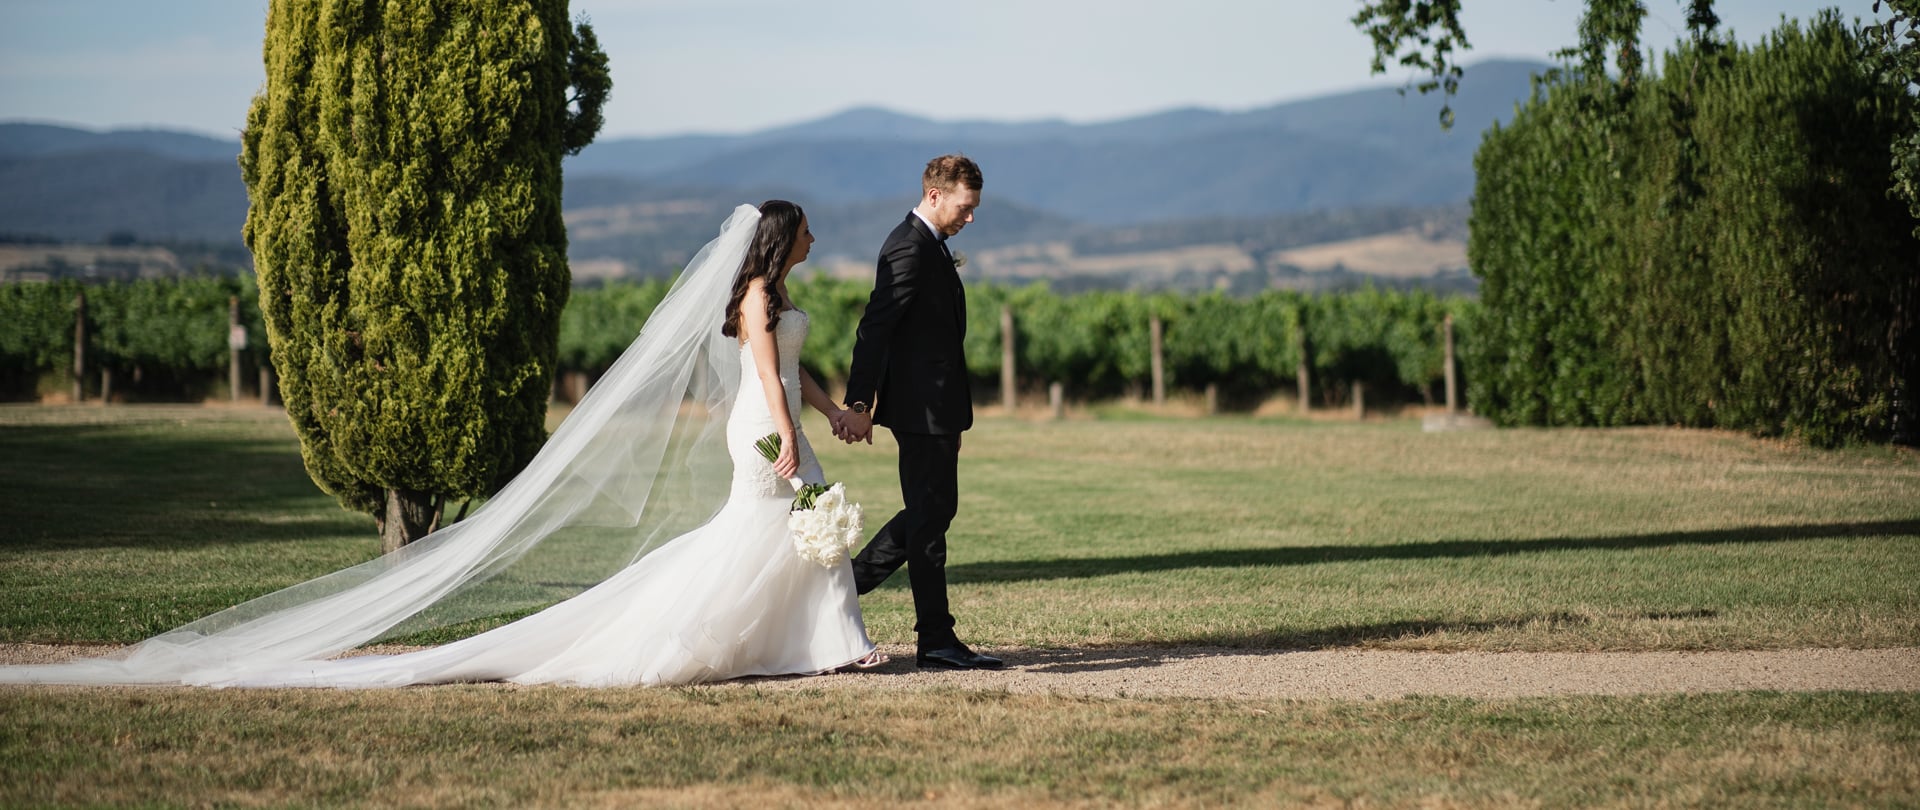 Rebecca & Ryan Wedding Video Filmed at Yarra Valley, Victoria